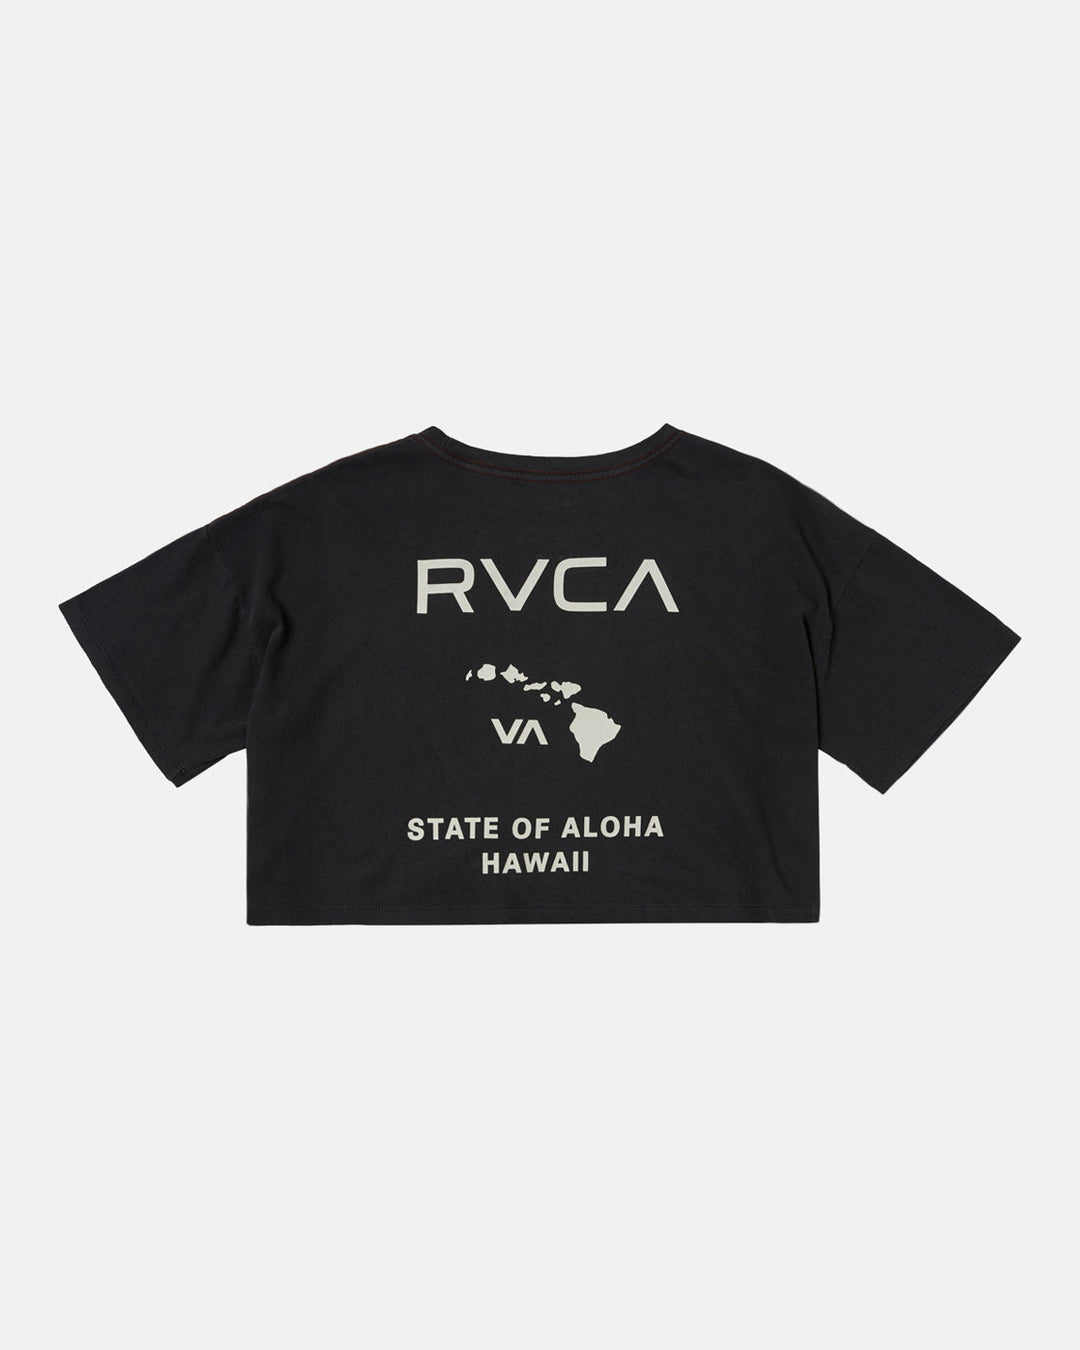 RVCA STATE OF ALOHA WOMEN'S TEE - BLACK